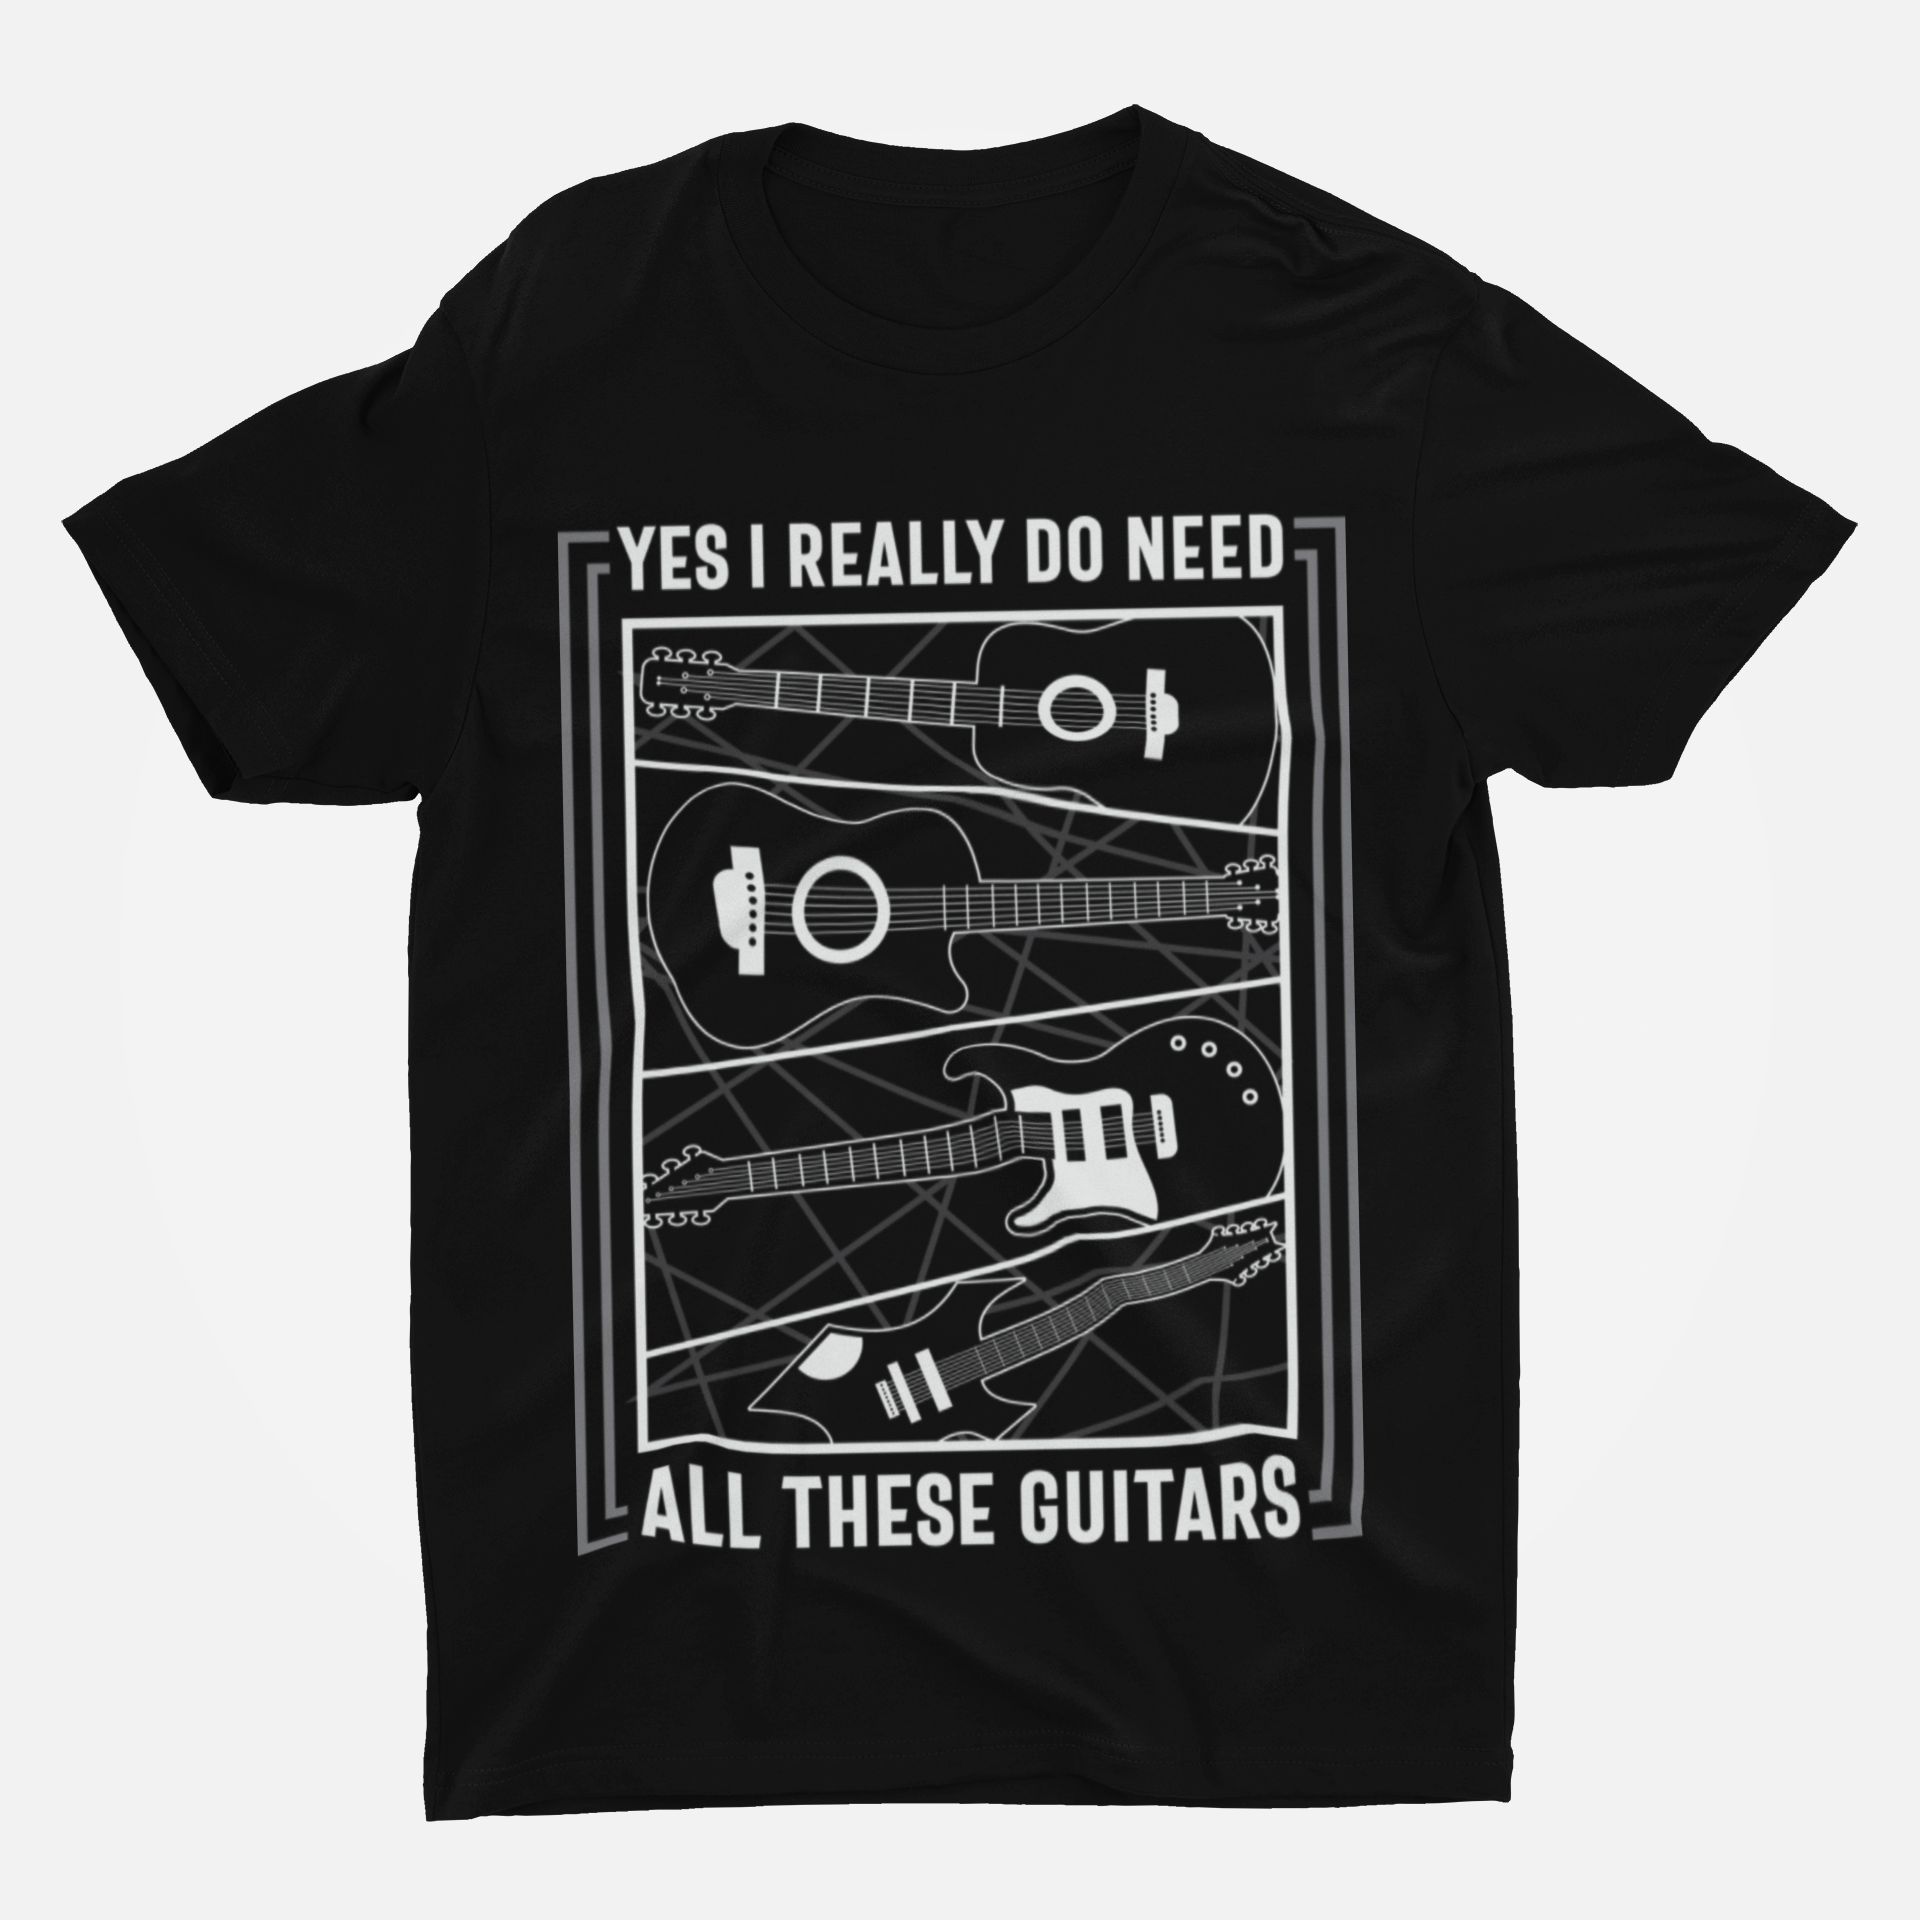 I Need All Guitars Black Round Neck T-Shirt for Men